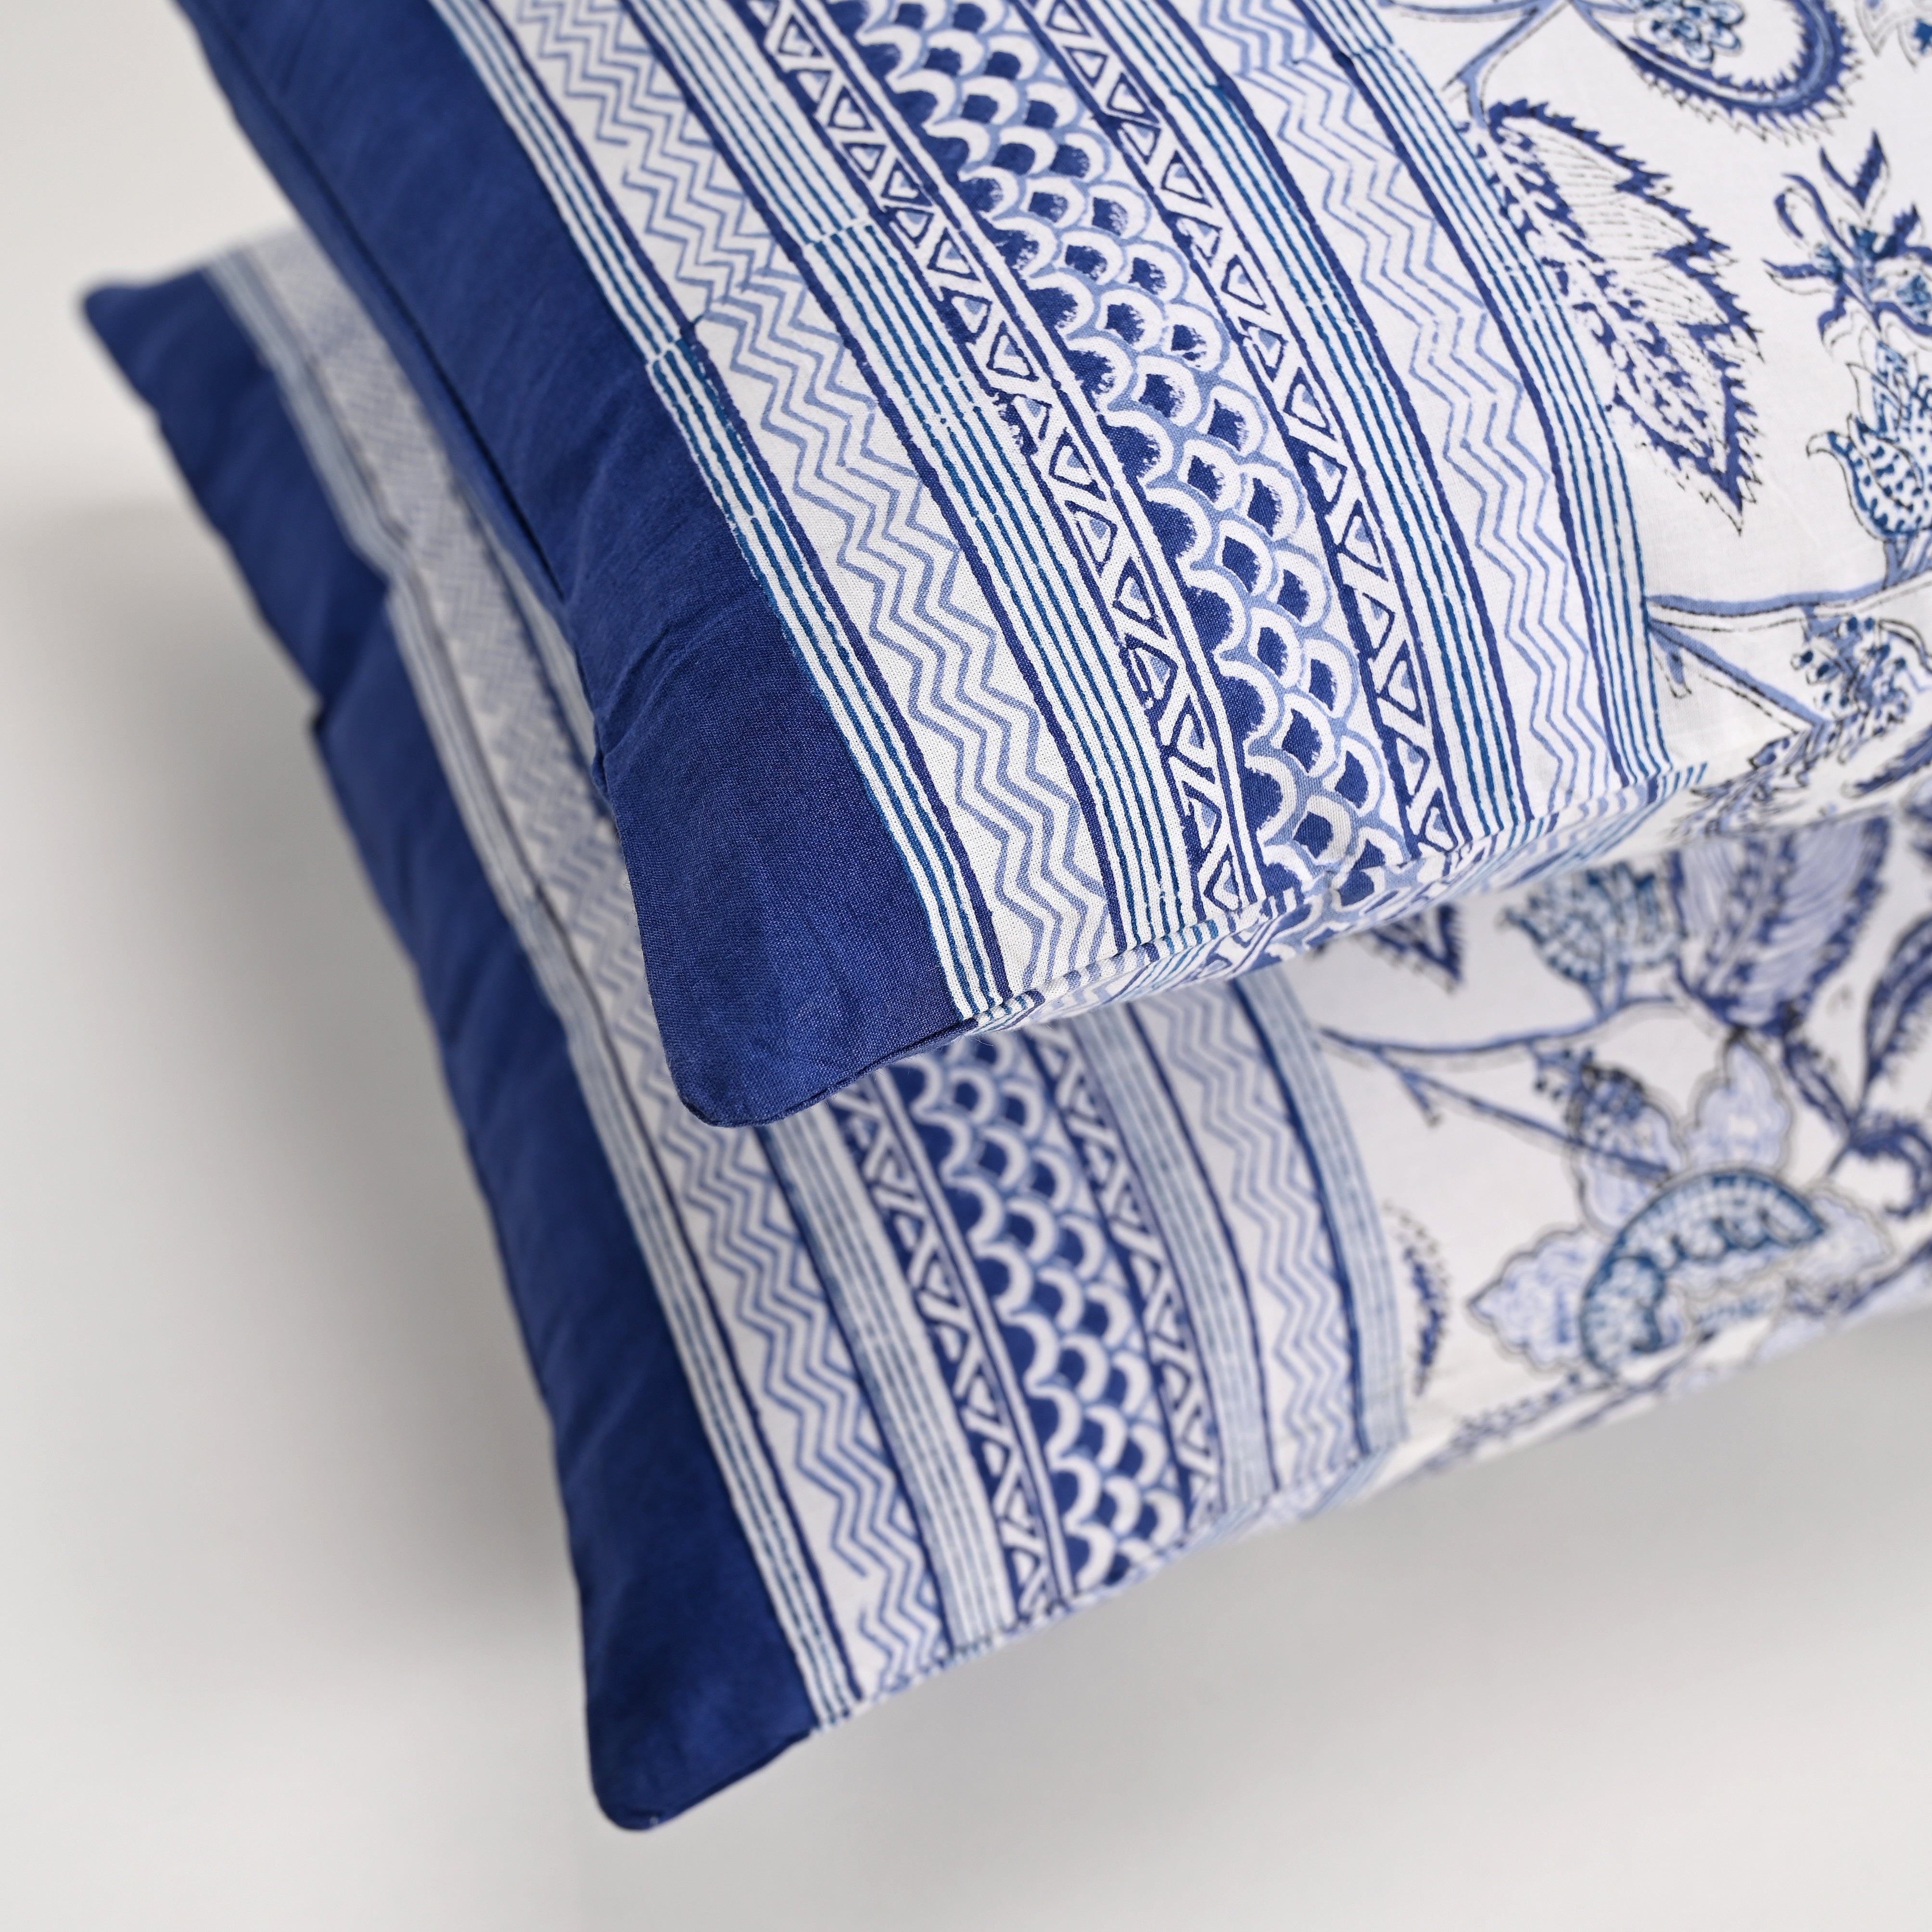 Euphoria Blue Block Printed Bed Sheetwith set of 2 Shams